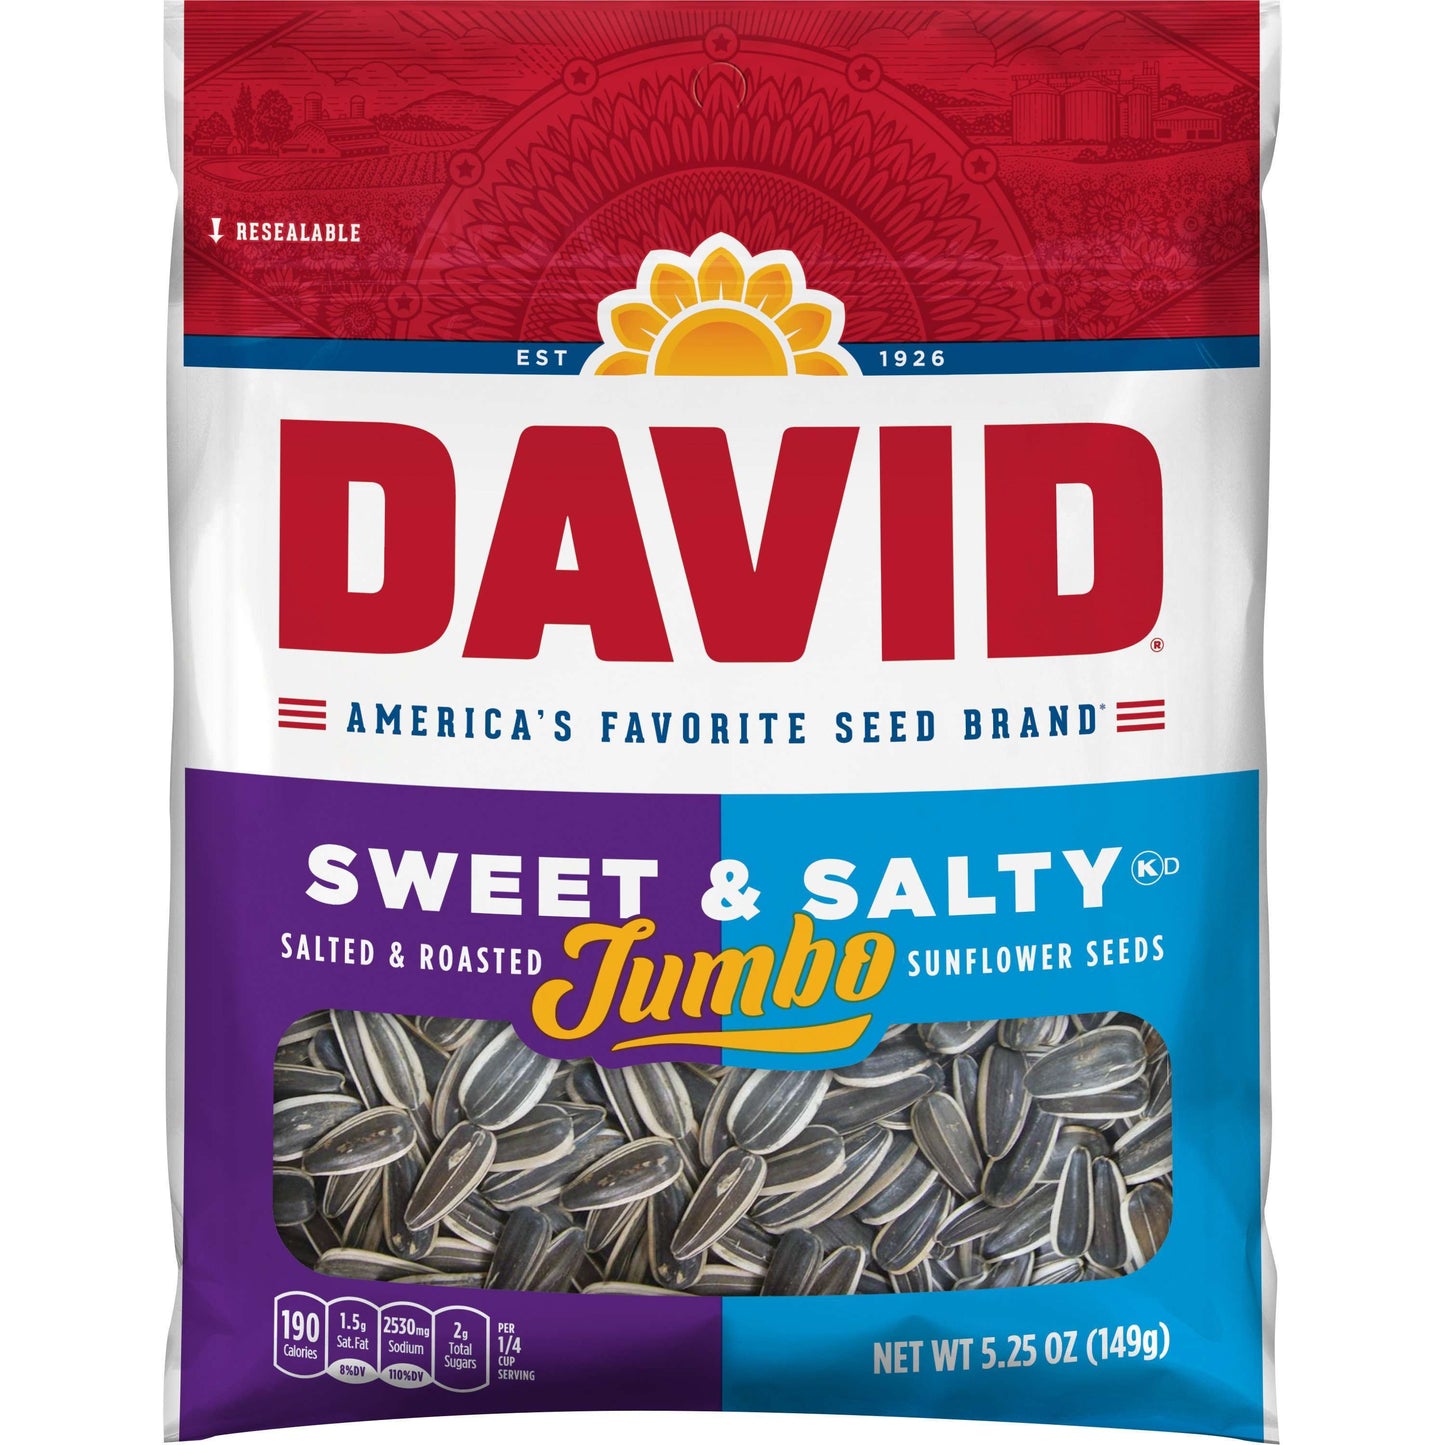 David Sweet & Salty Jumbo Sunflower Seeds 5.25oz. (149g)